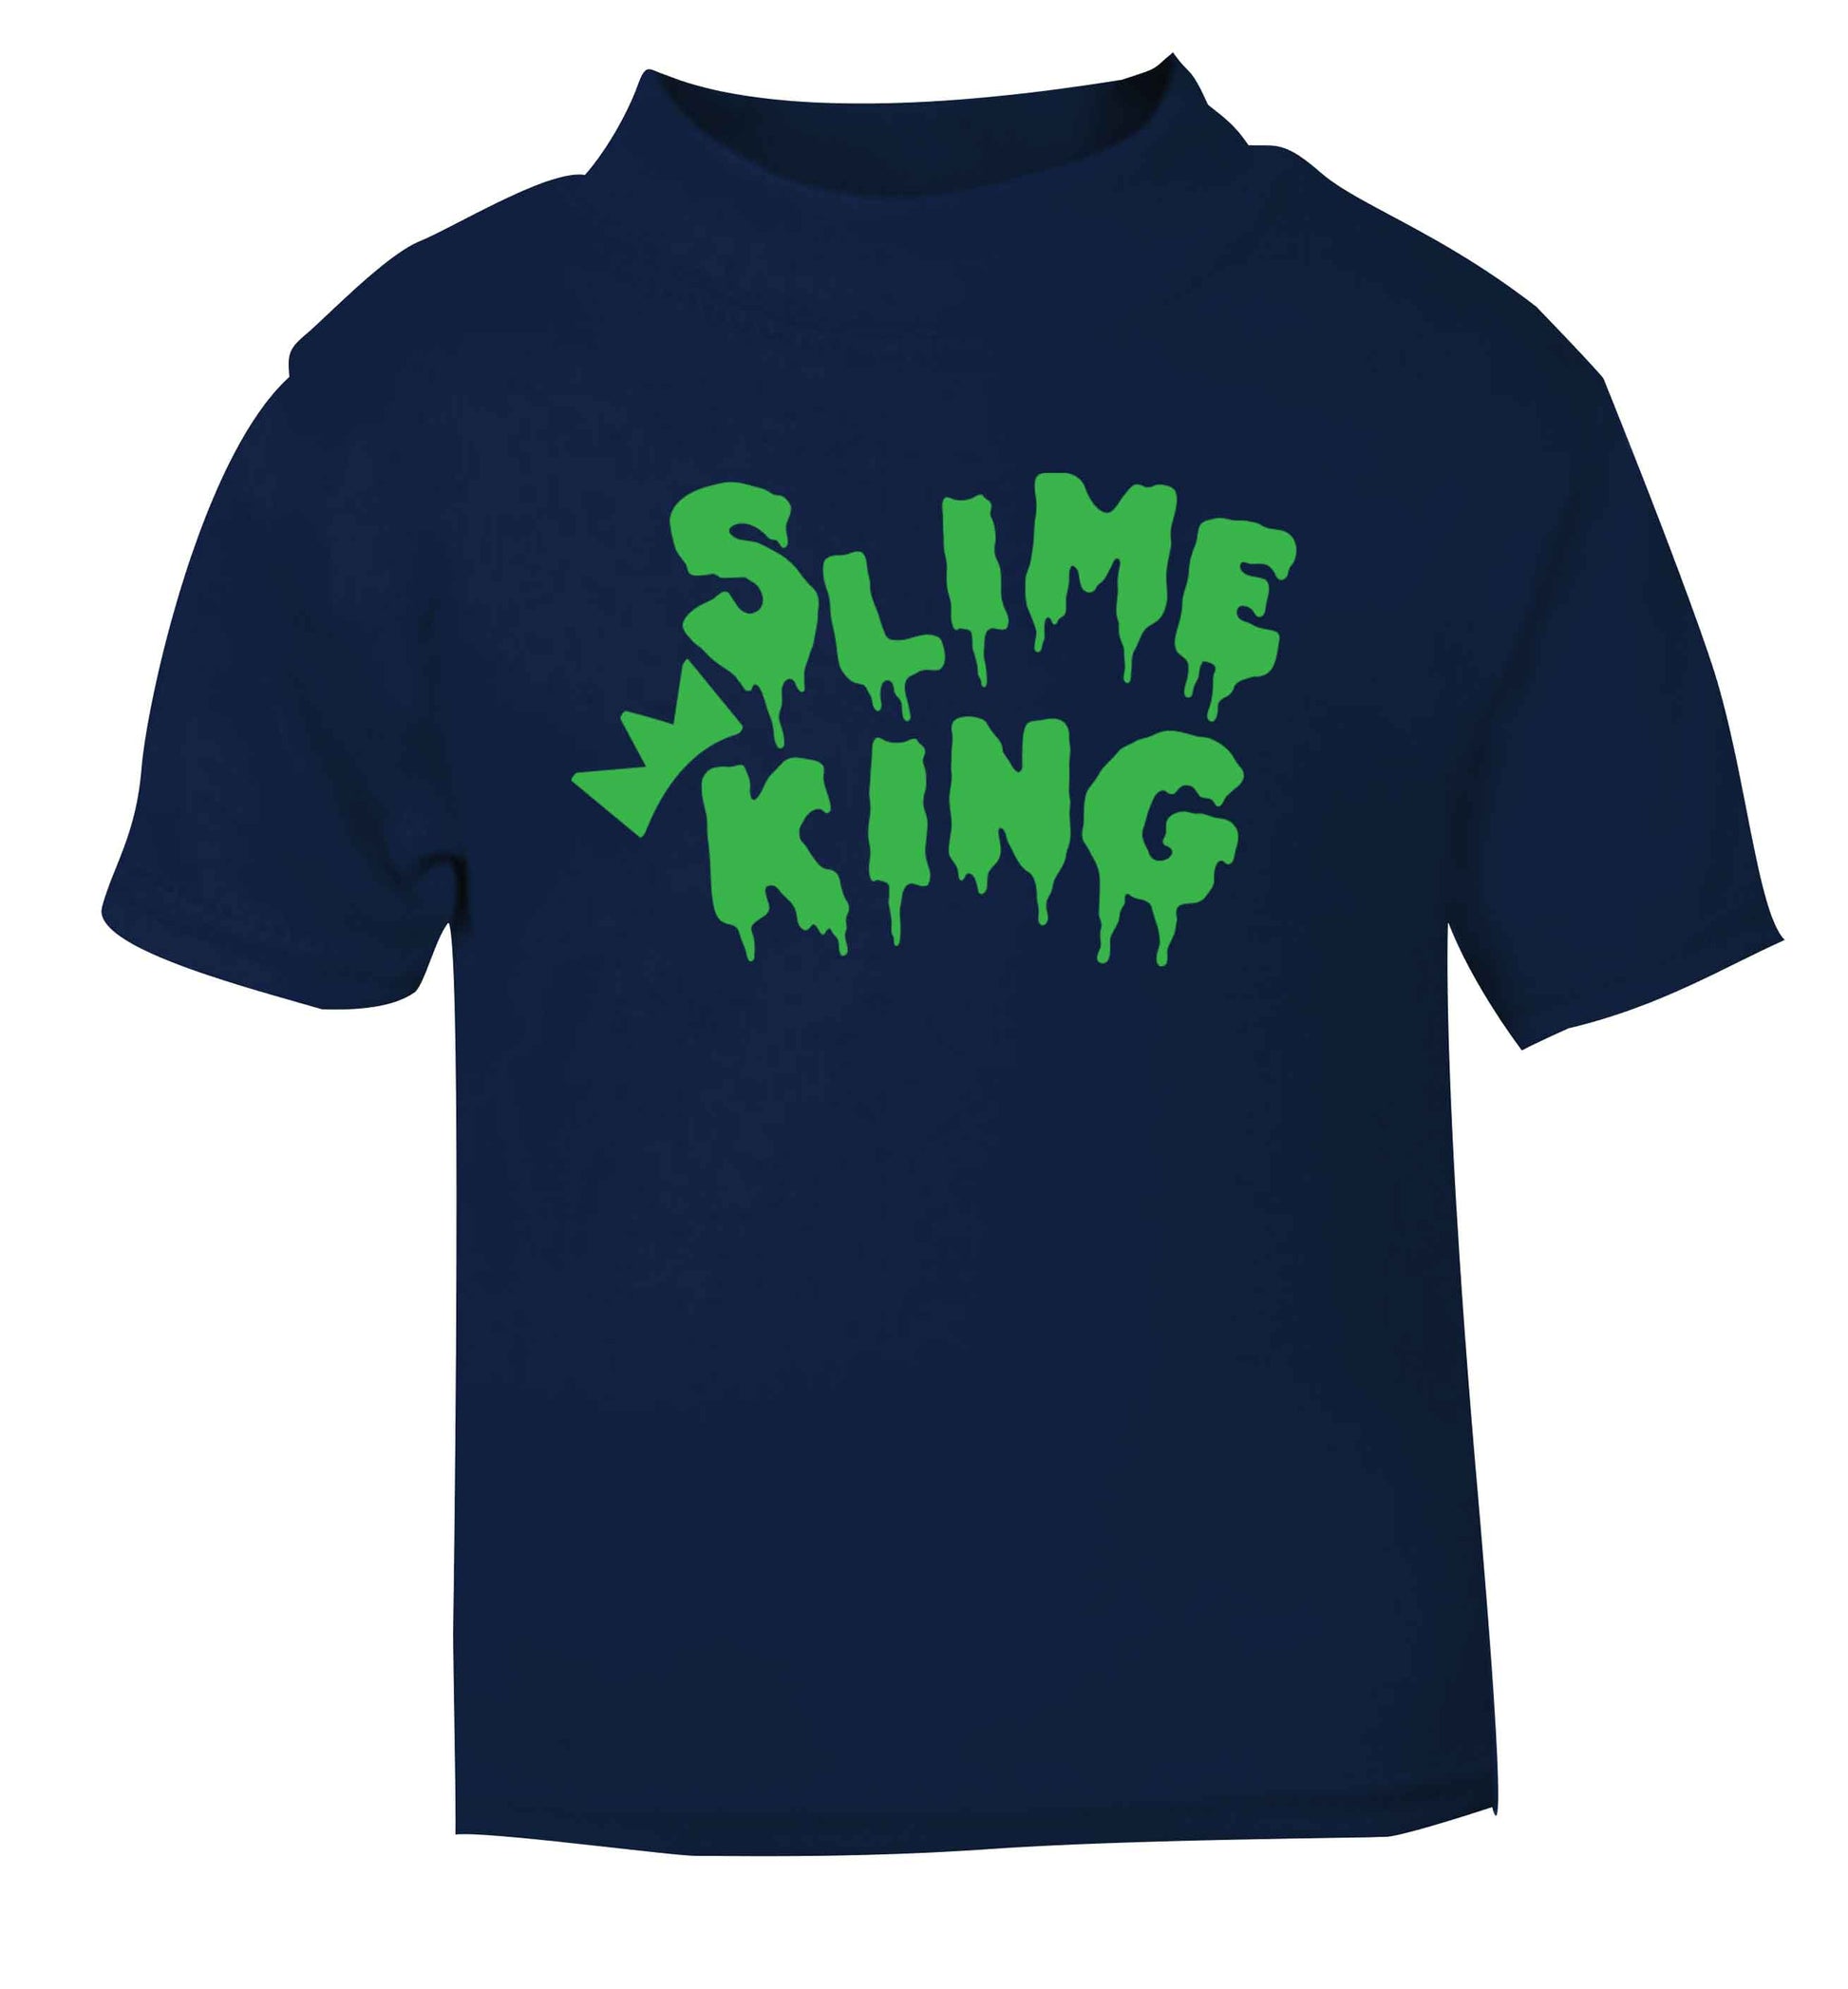 Neon green slime king navy baby toddler Tshirt 2 Years